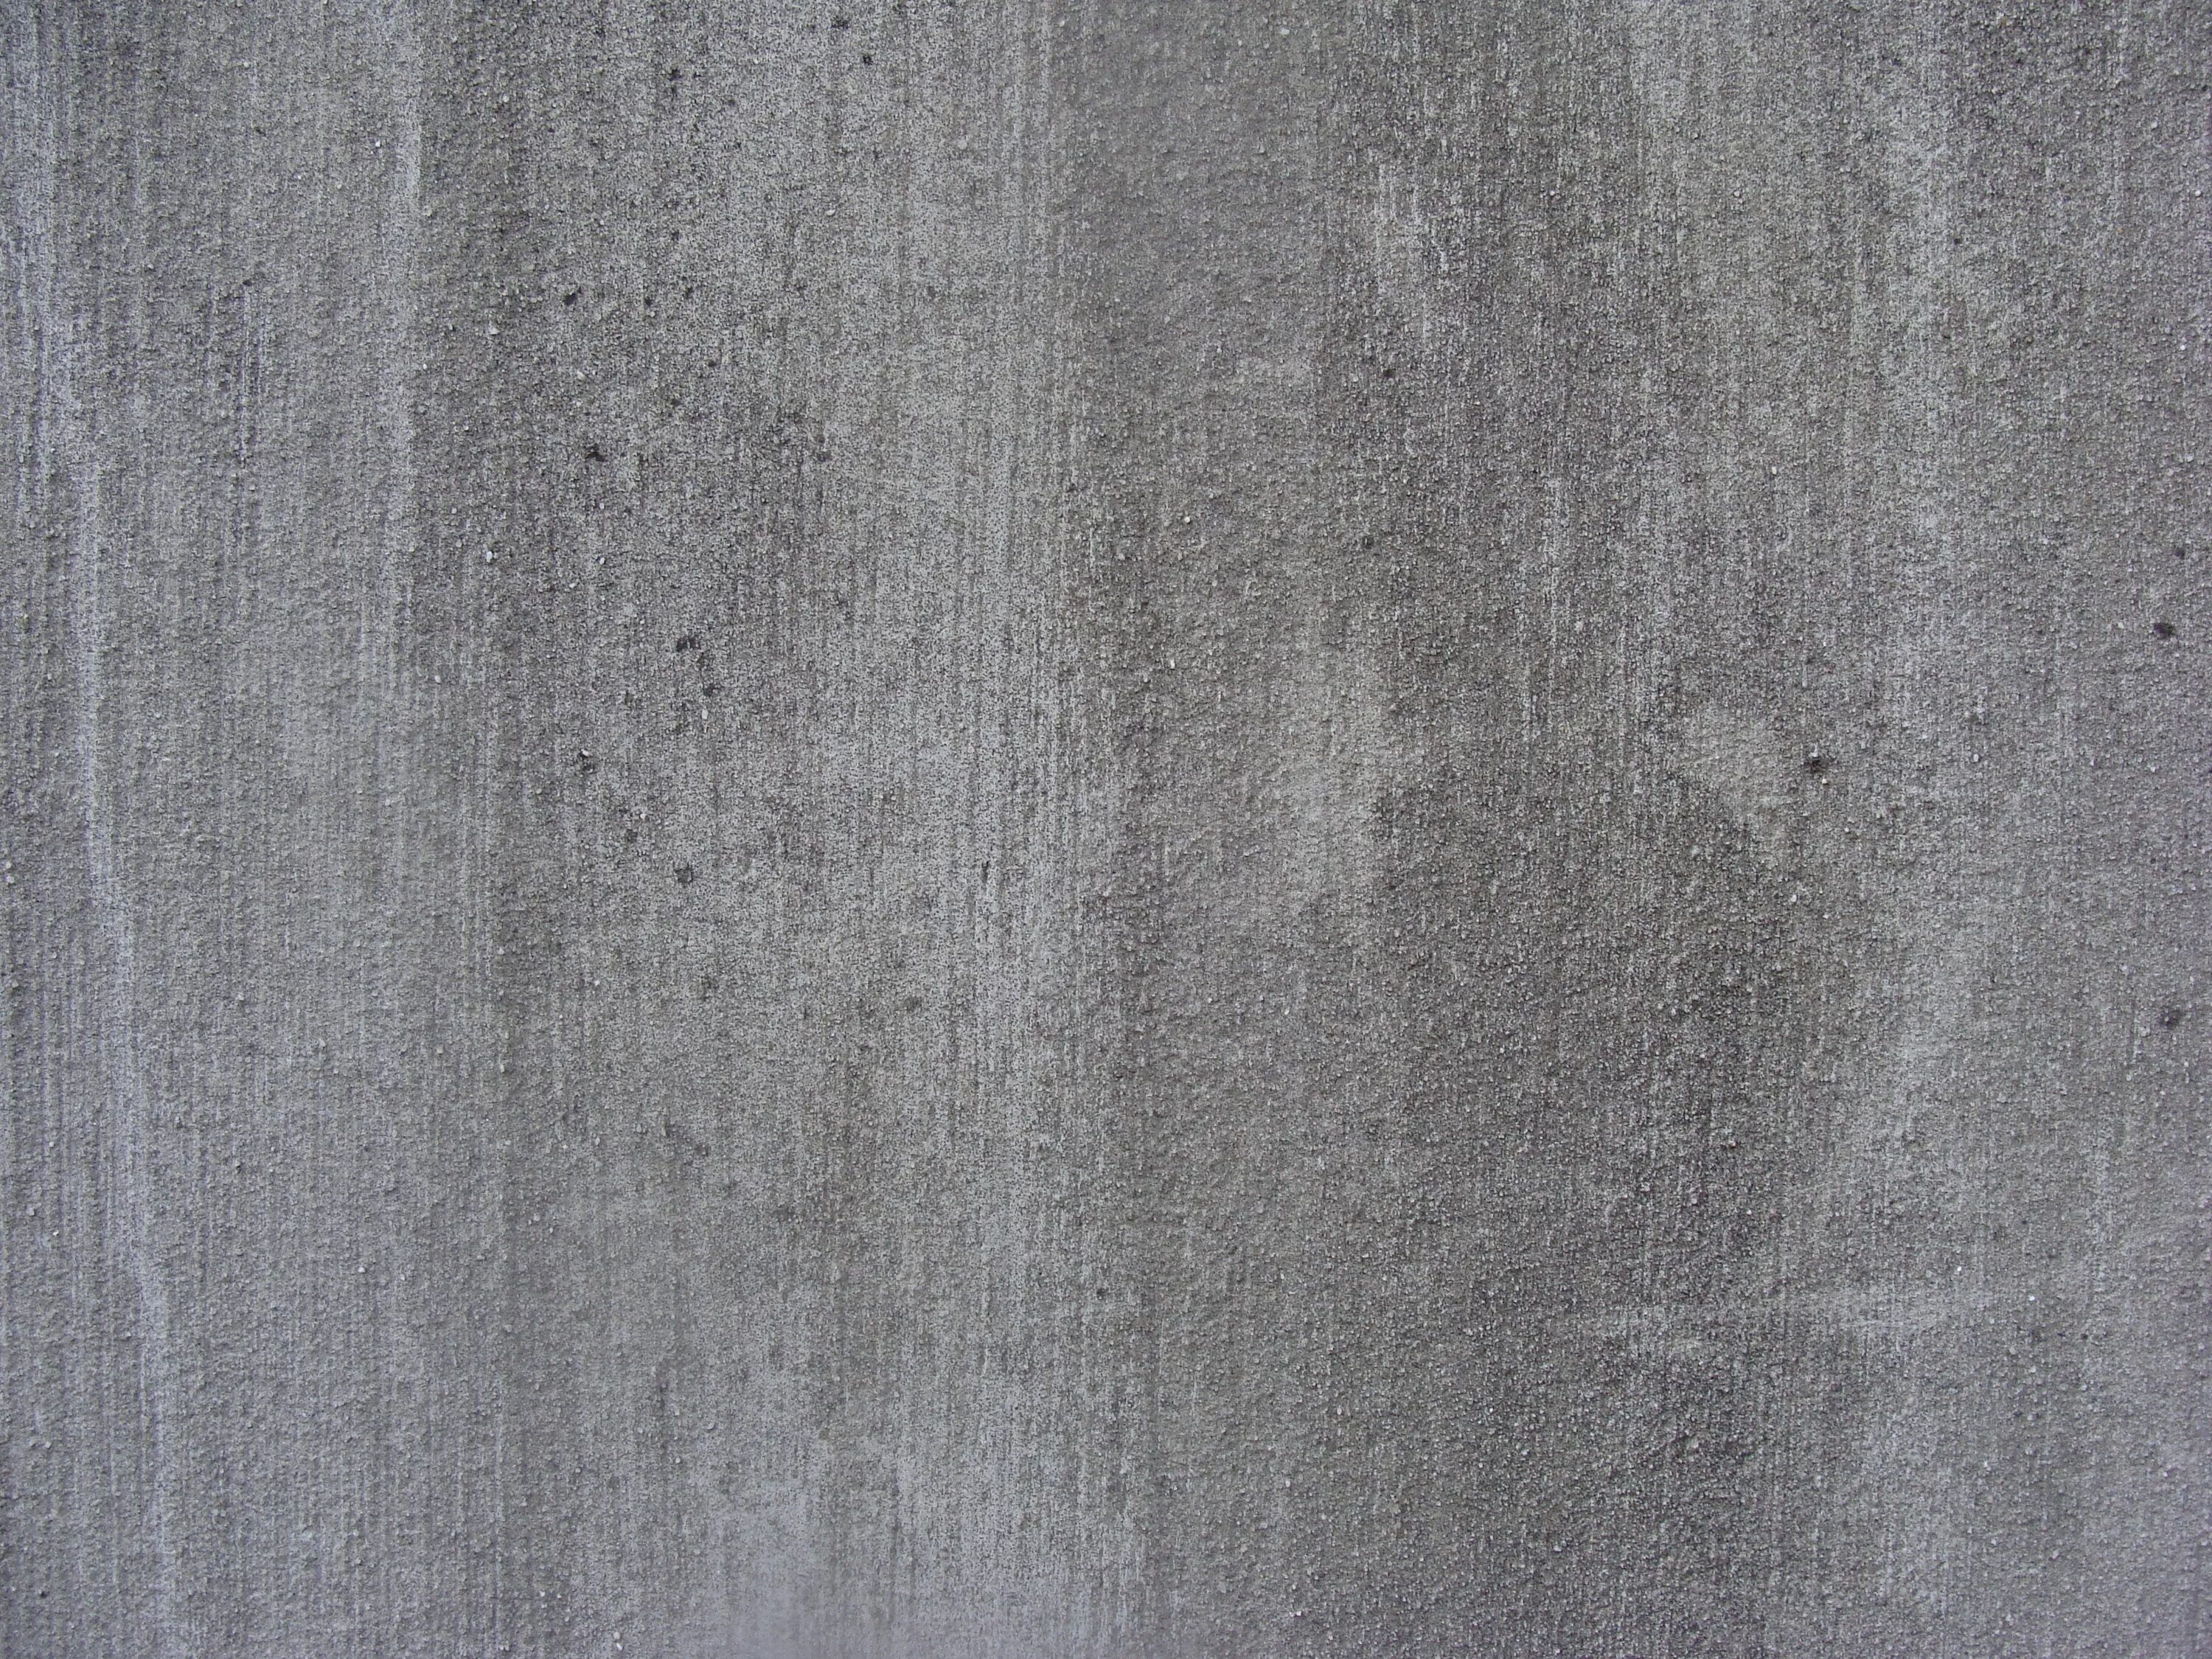 Серый бетонный цвет. Бетон серый Grey Concrete. Бетон серый Grey Concrete p270. Текстура бетона. Бетонная стена текстура.